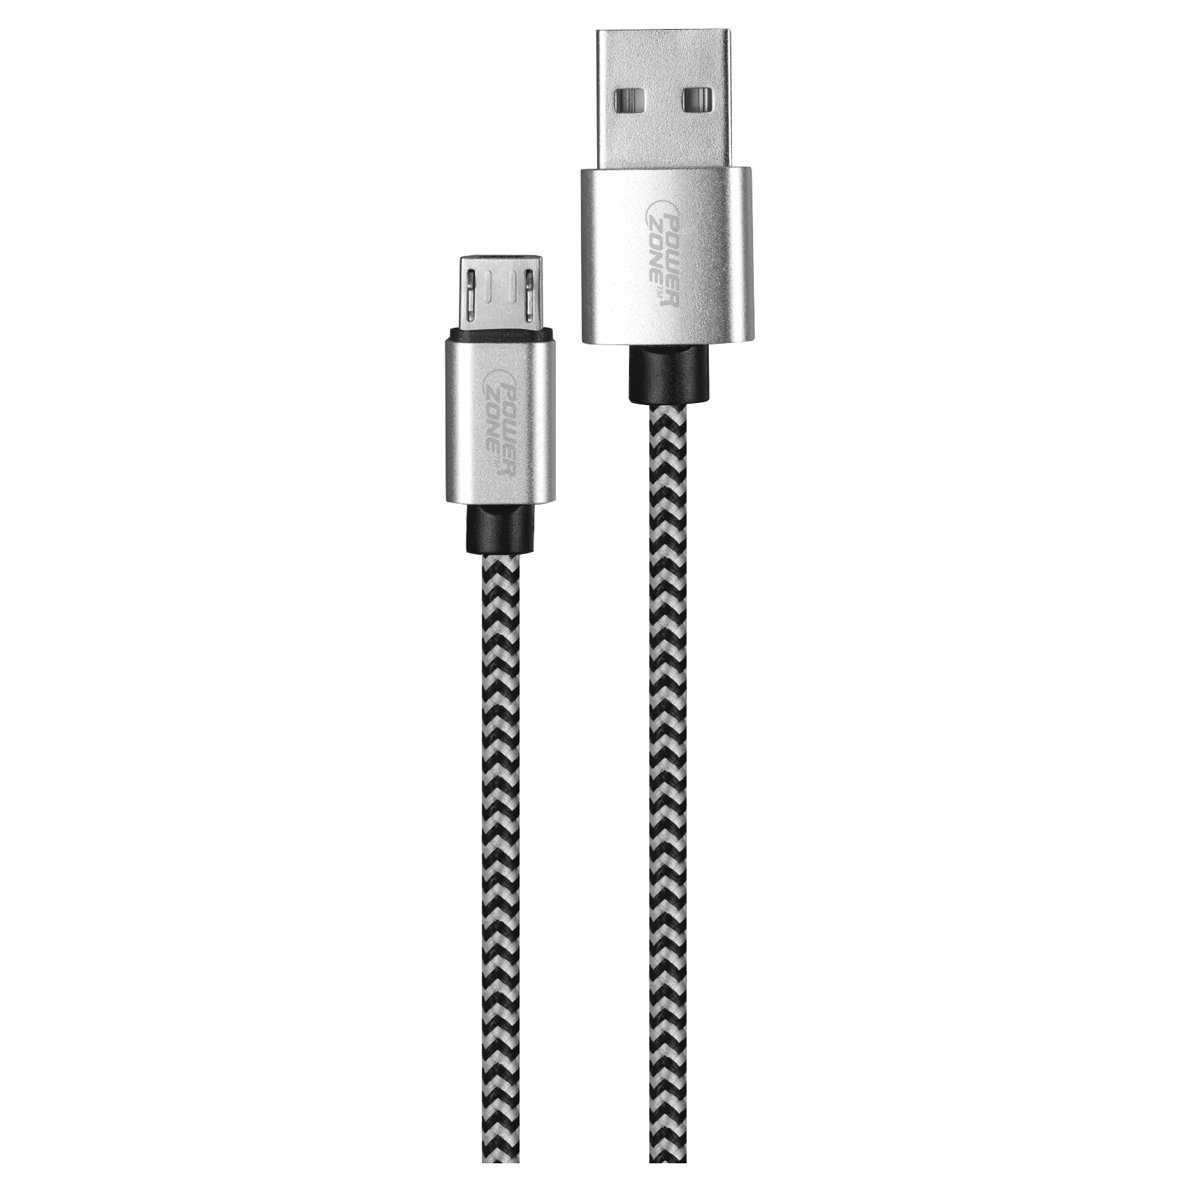 PowerZone KL-029X-1M-MICRO Micro Charging Cable, Micro USB, USB, Black/White Sheath, 3 ft L